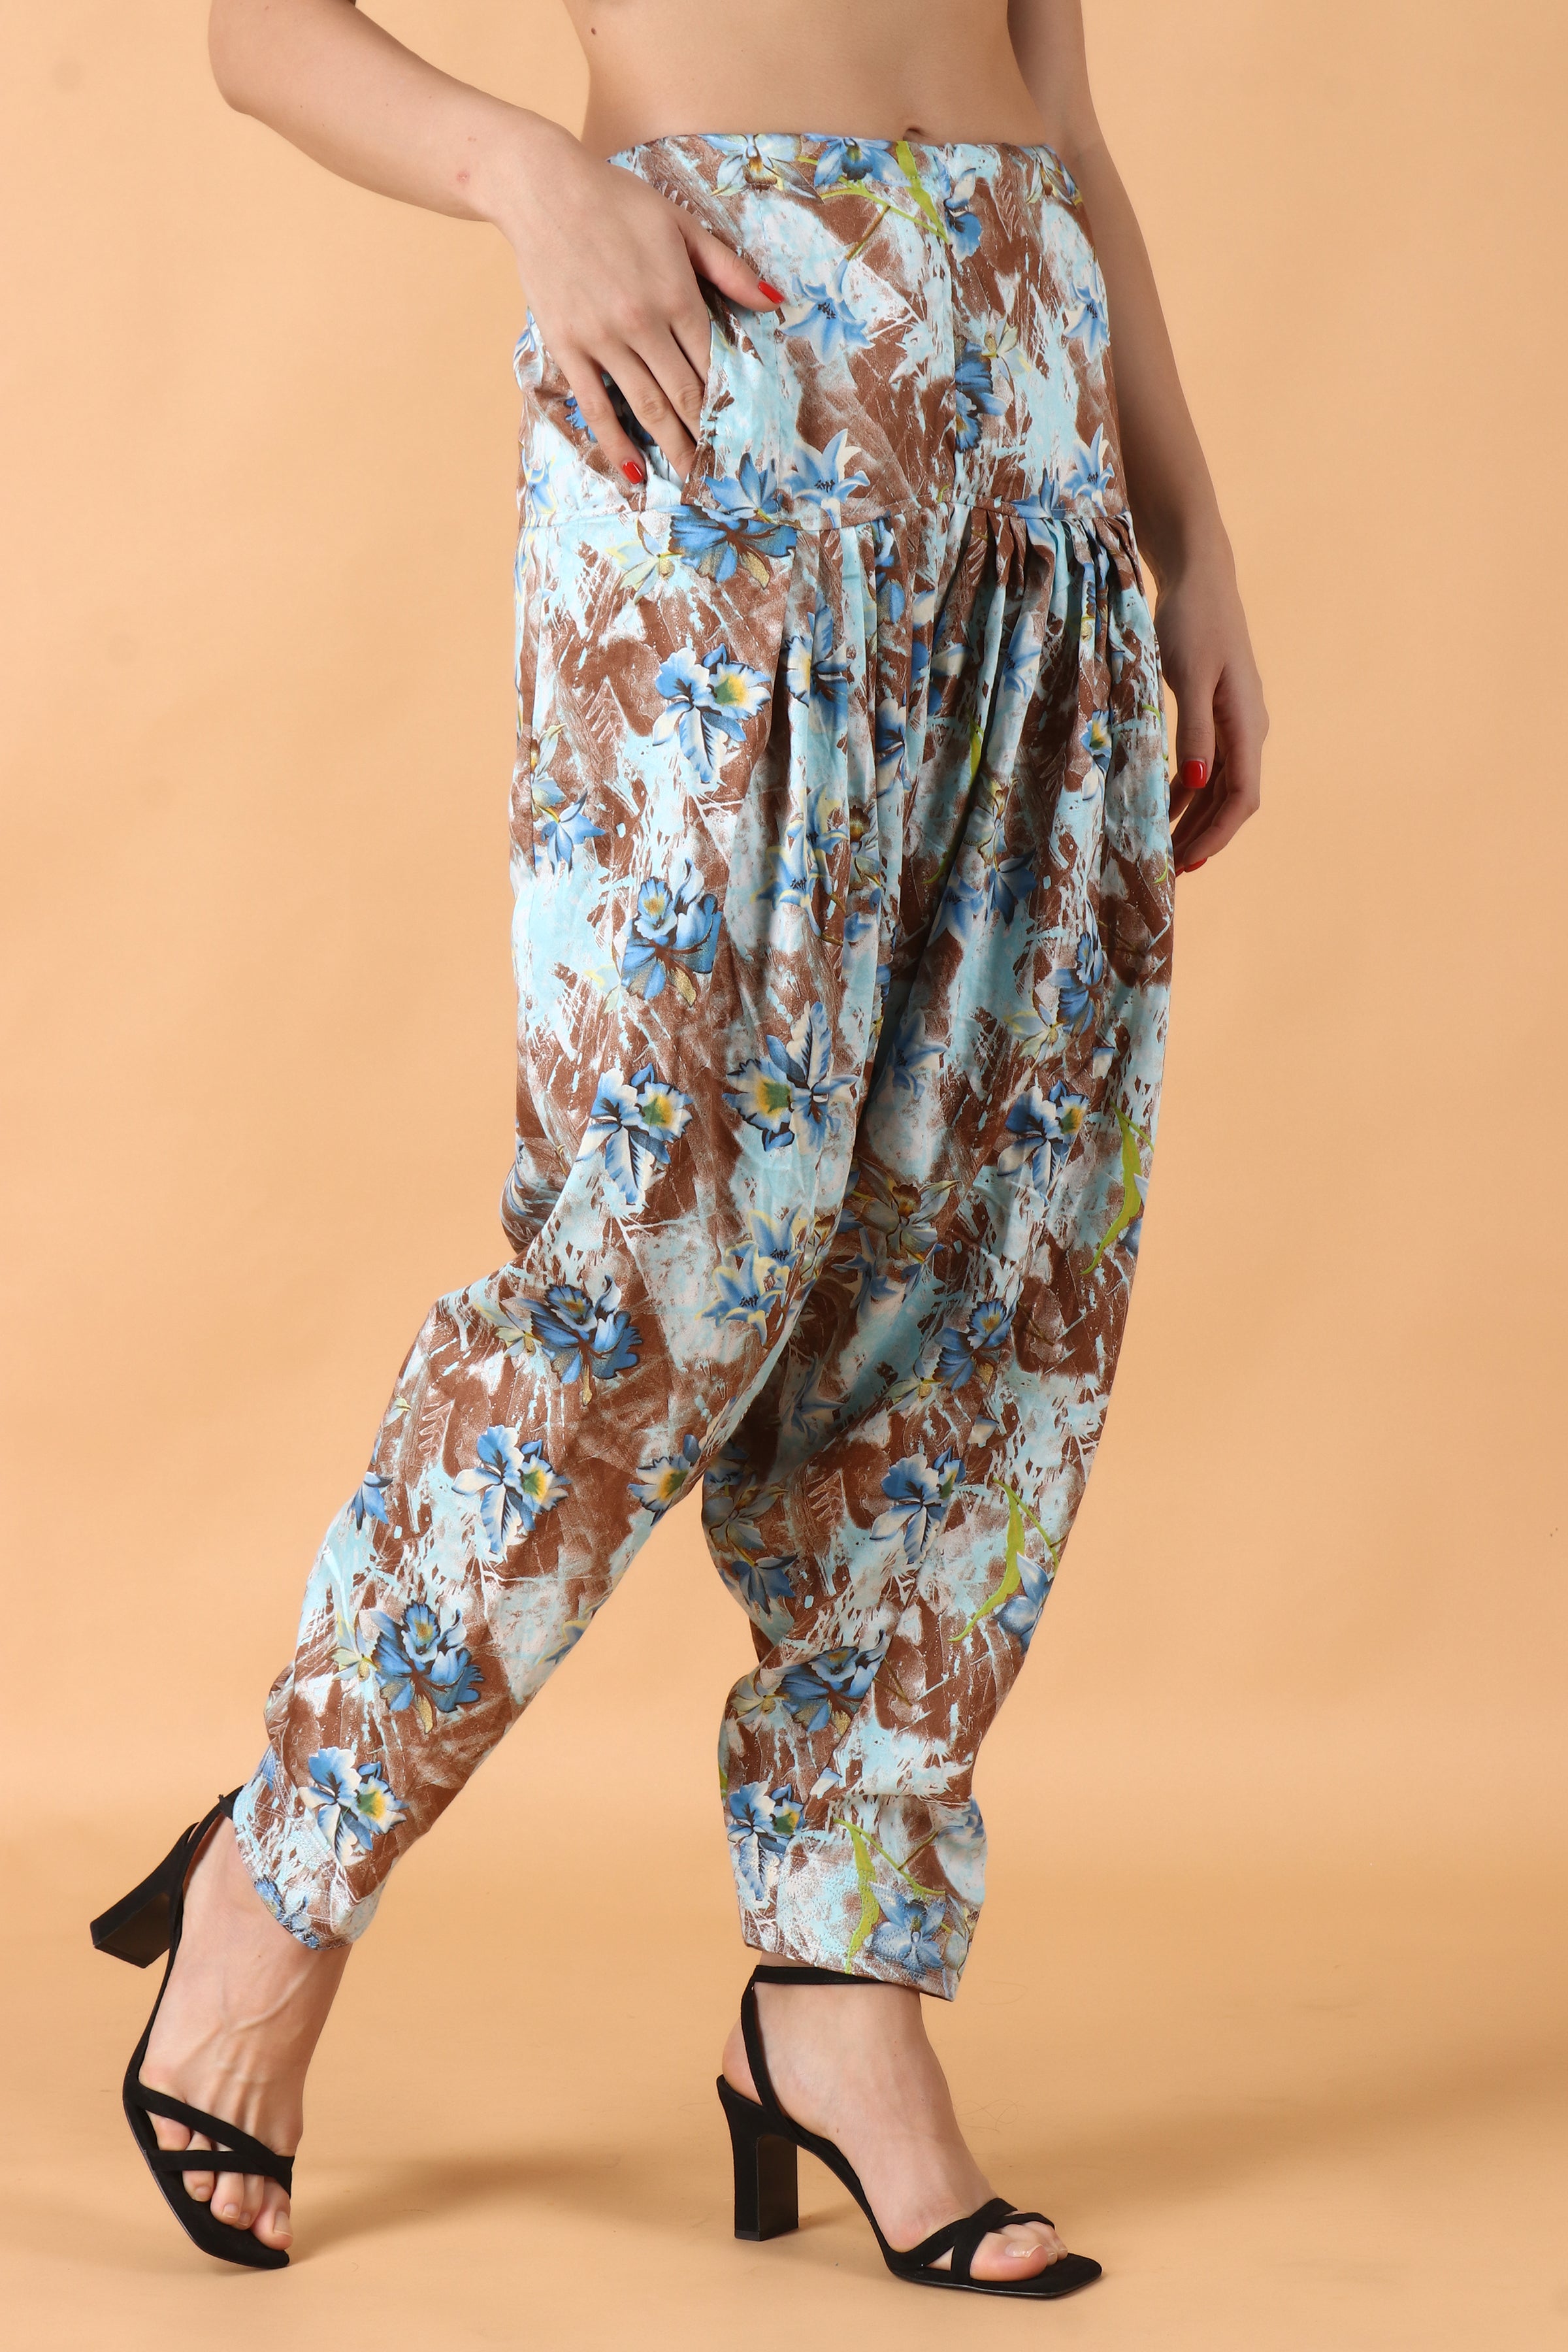 Cigain Women's Fashions Rayon Print Loose Fit Baggy Hippie Boho Gypsy Trouser  Harem Dhoti Plus Size Summer Yoga Pants (Multicolor) : Amazon.in: Fashion